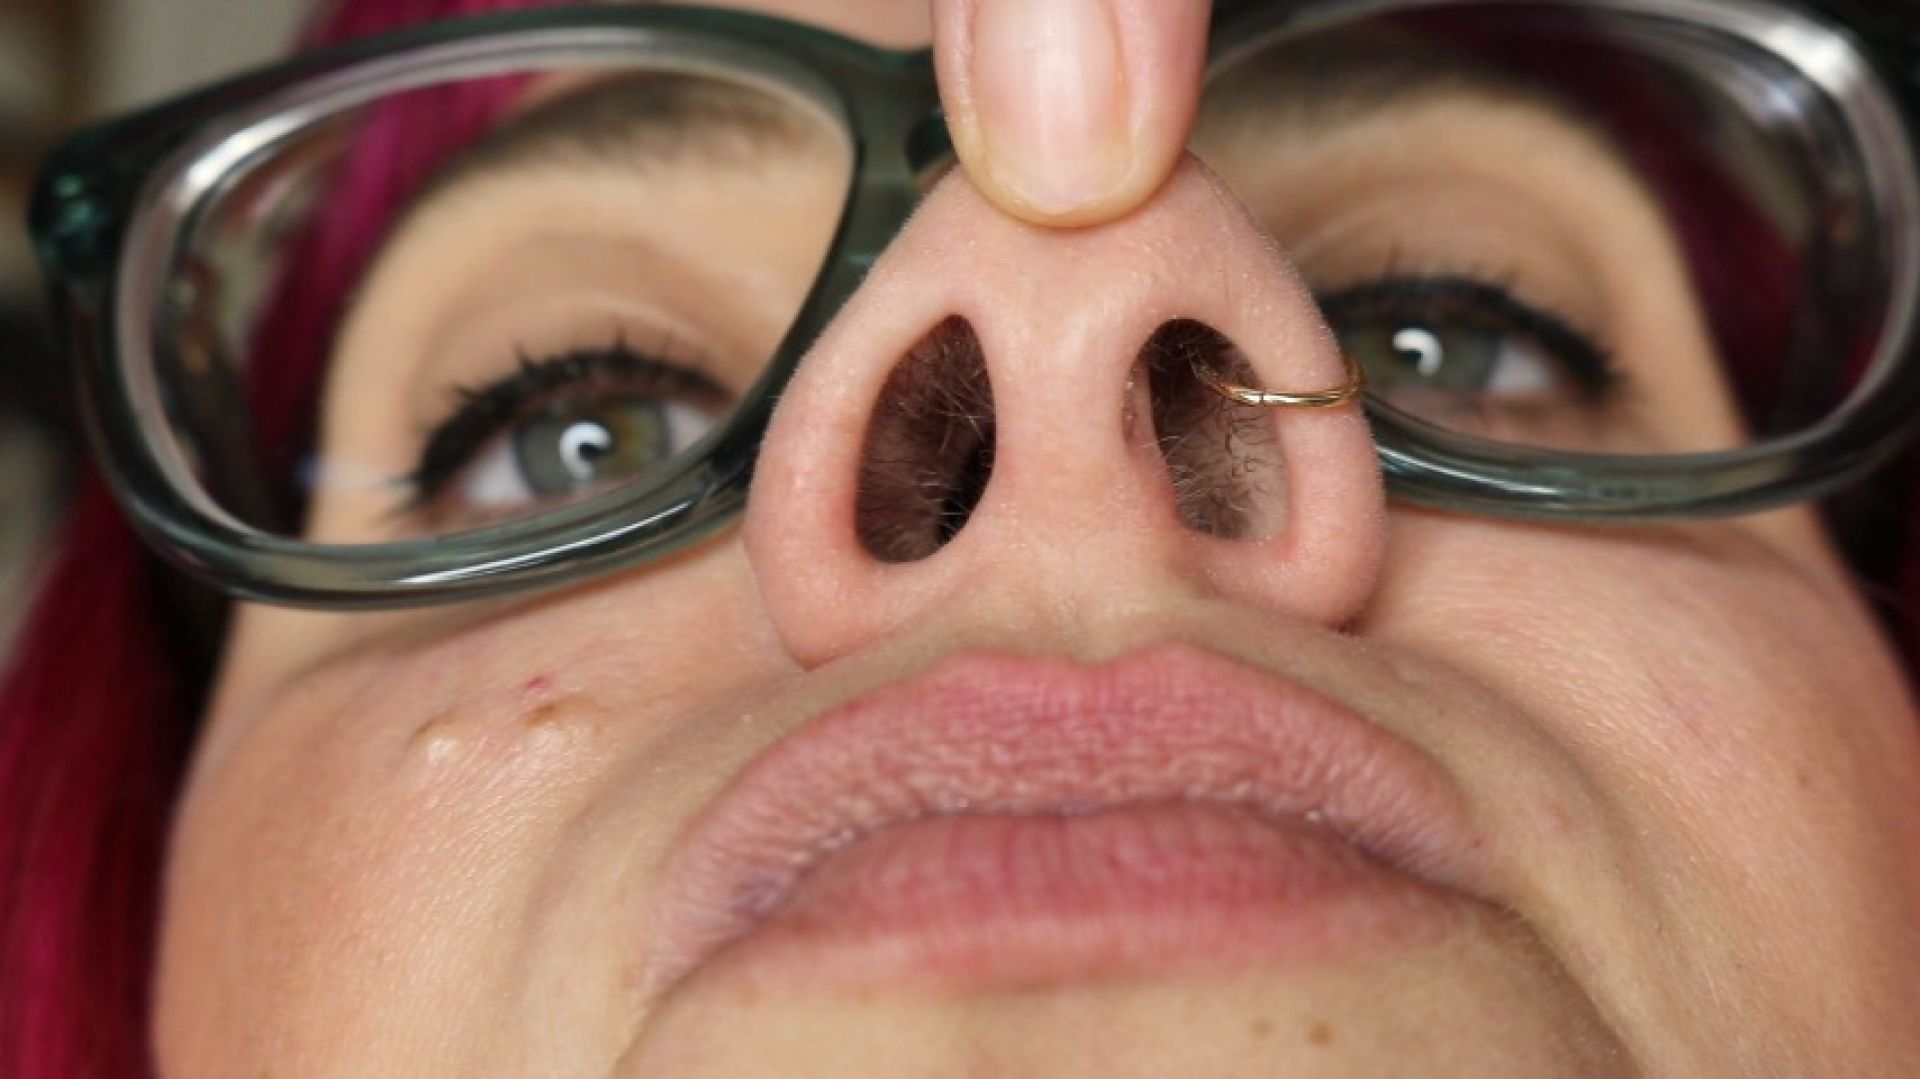 Up Close Nose Fetish